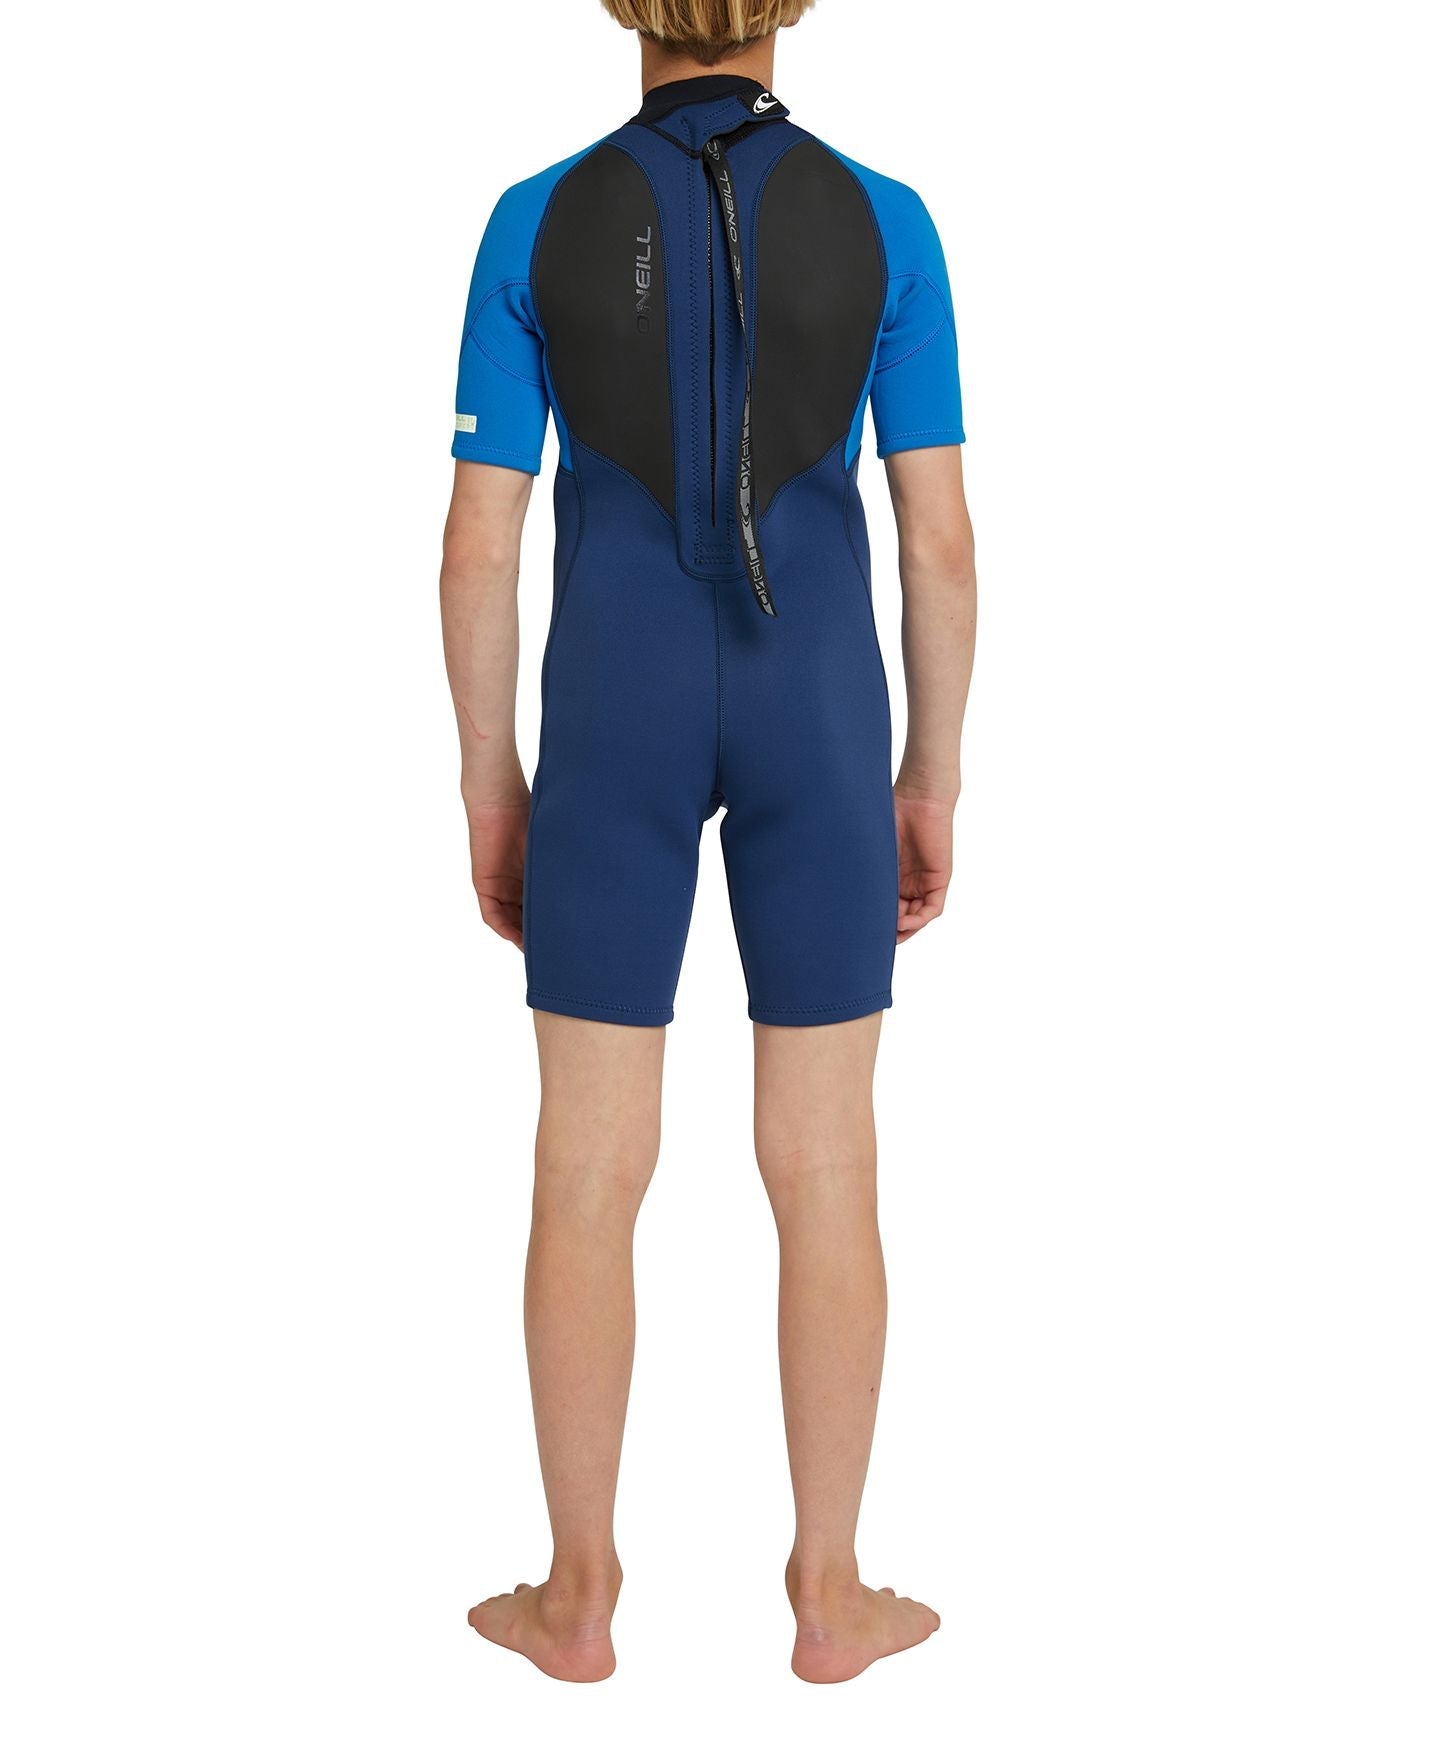 Boy's Reactor Spring Suit 2mm Short Sleeve Wetsuit - Navy